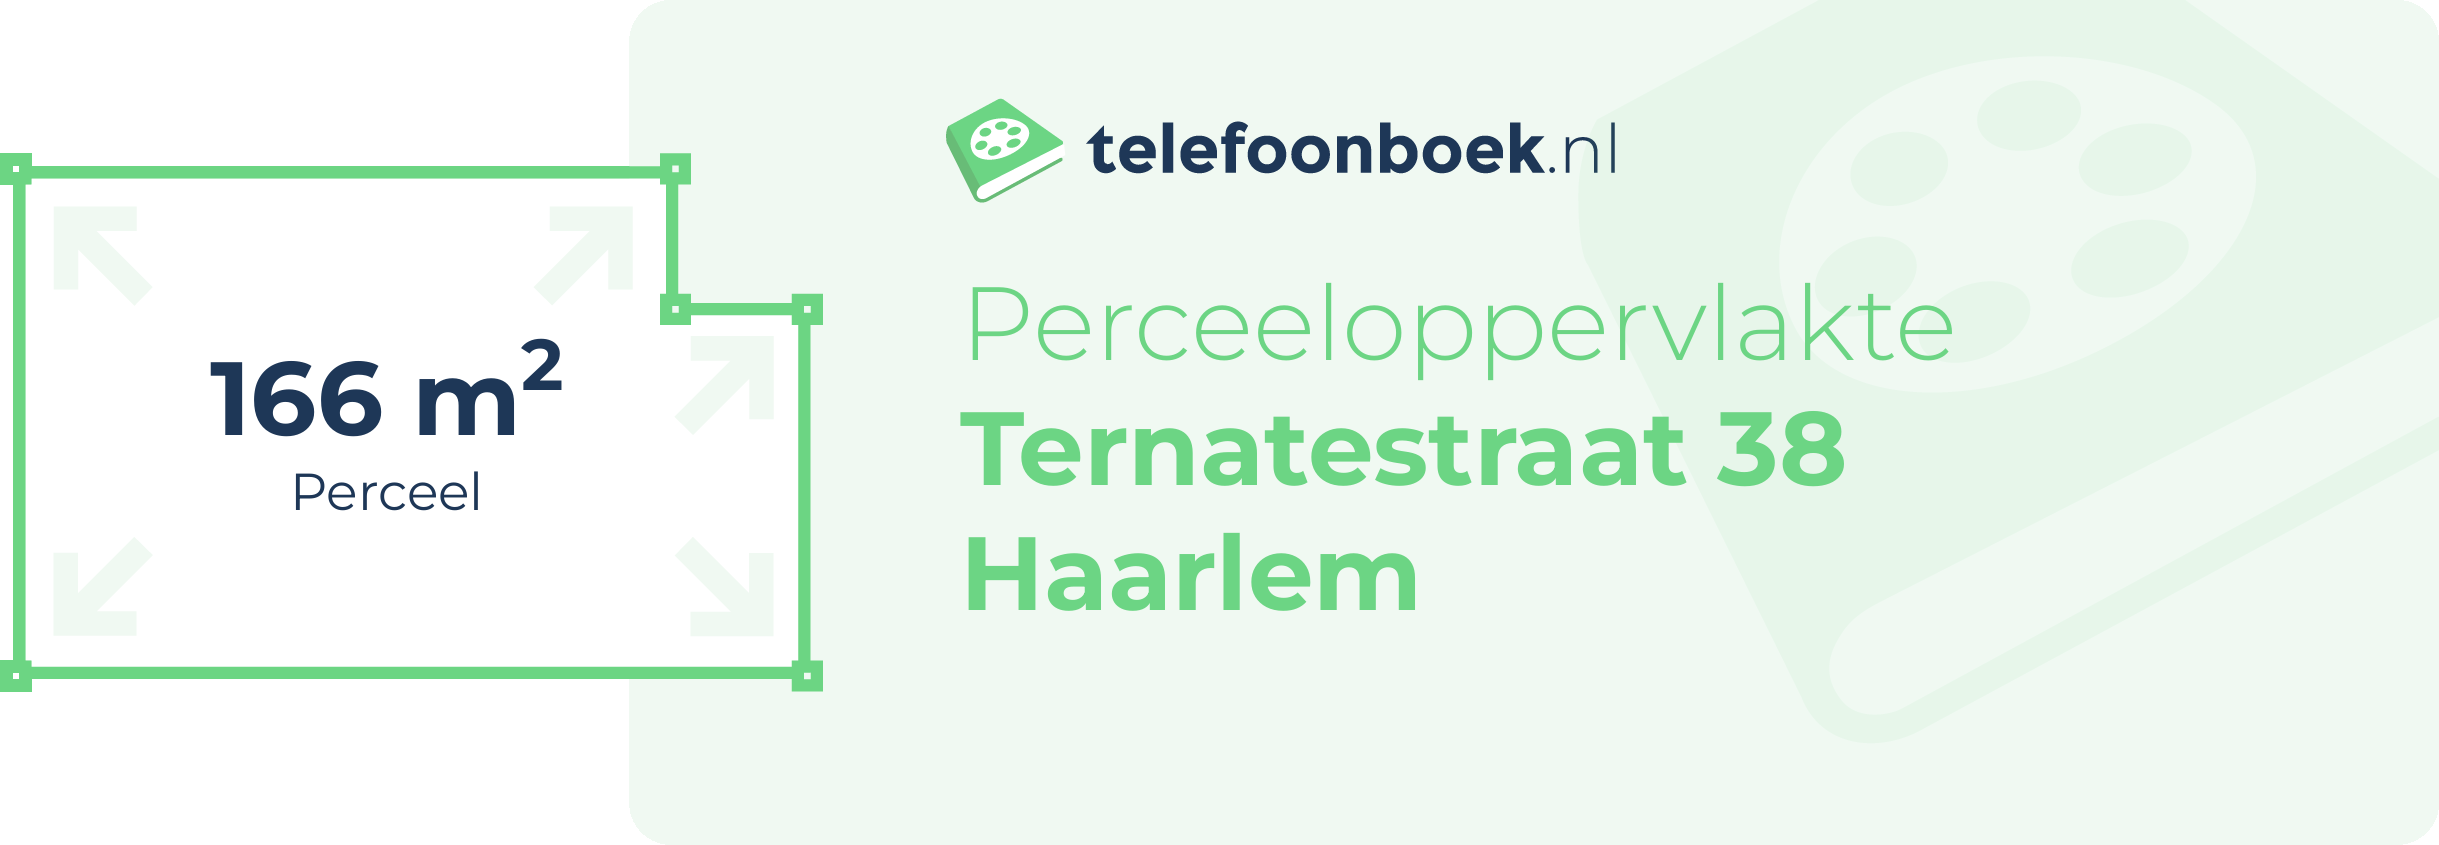 Perceeloppervlakte Ternatestraat 38 Haarlem